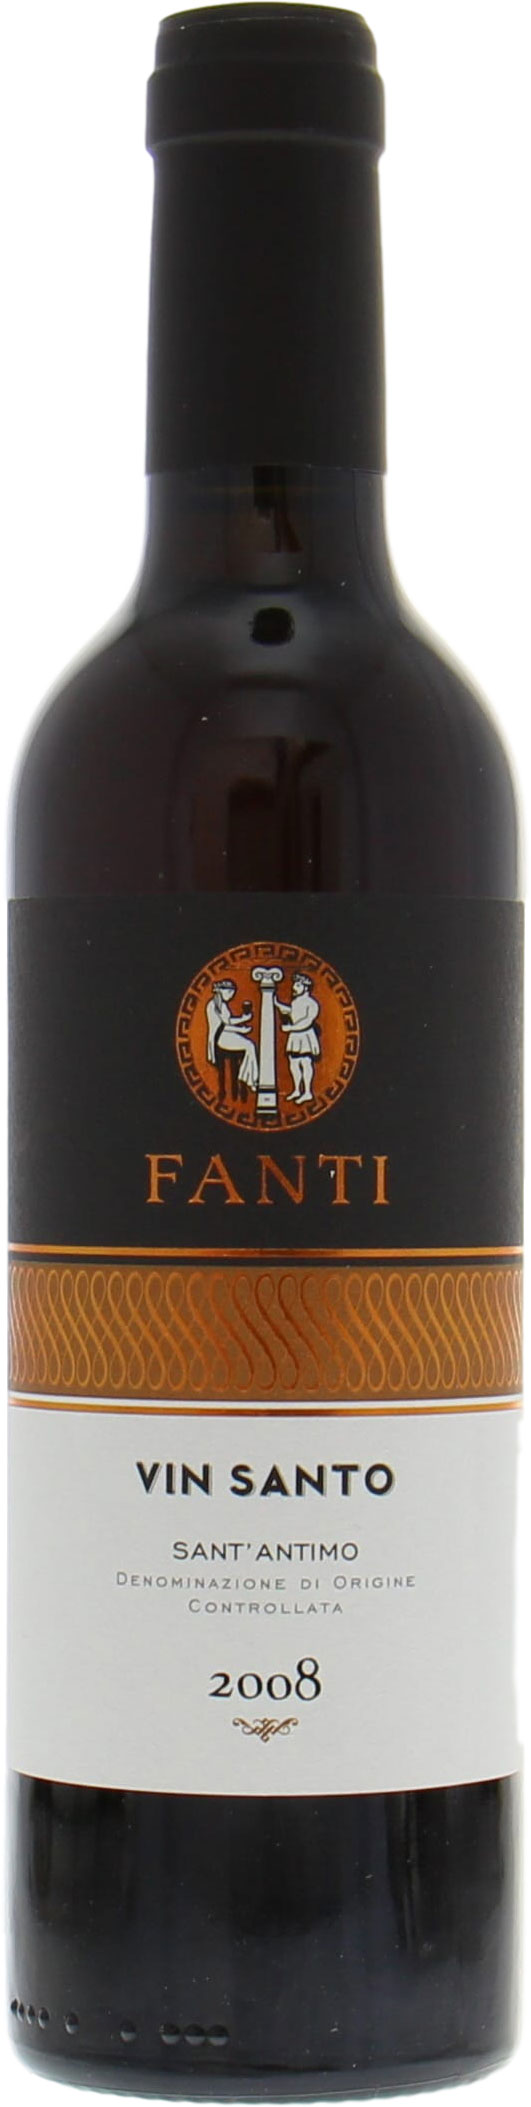 Tenuta Fanti - Sant'Antimo Vin Santo 2008 Perfect